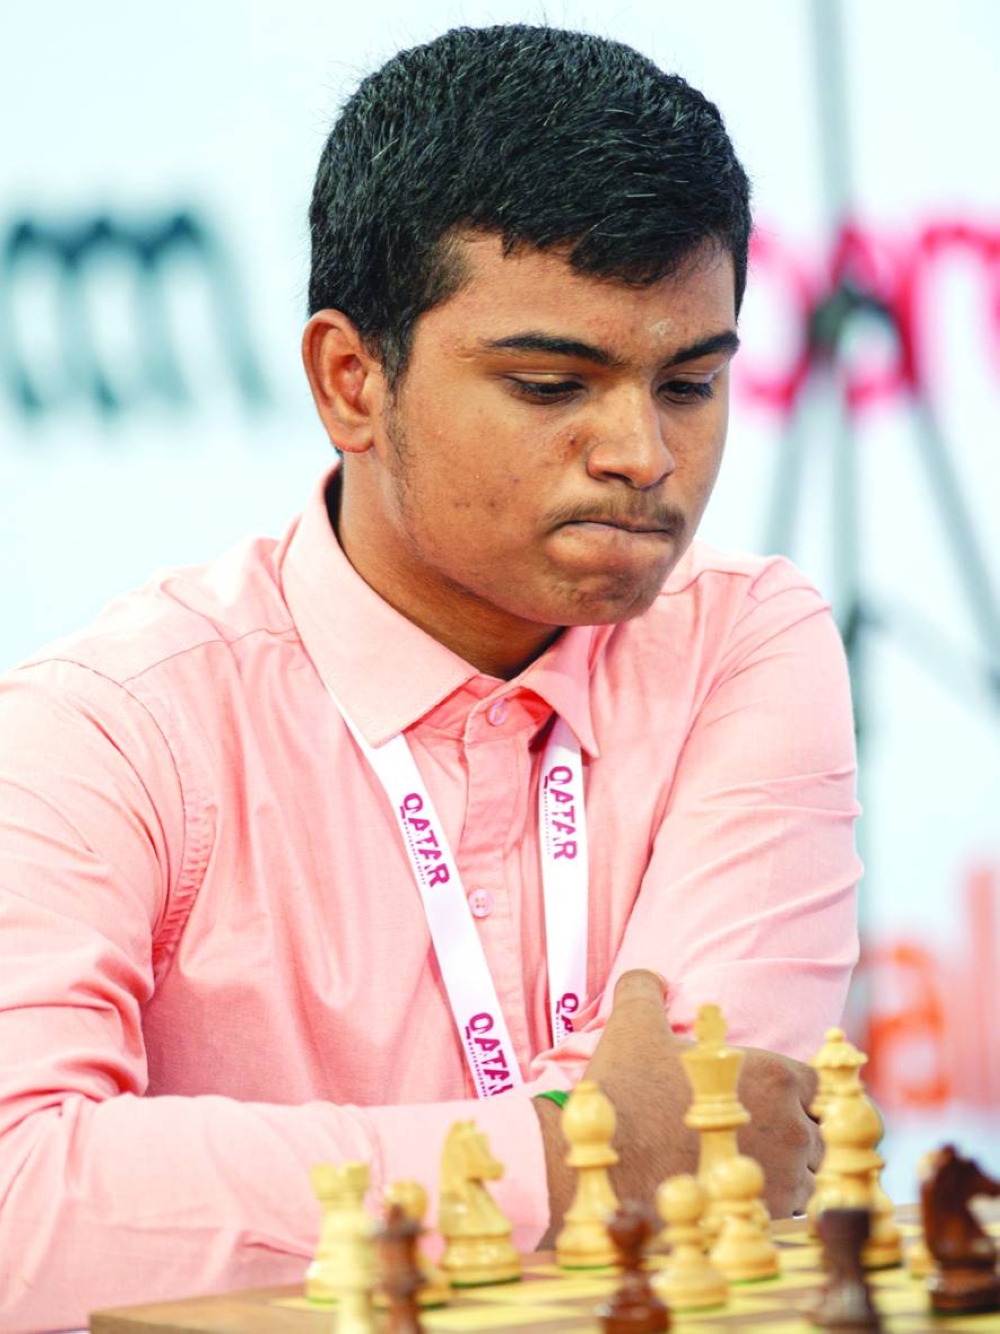 Qatar Chess Masters/ Carlsen Regains Winning, First Victory for Qatari  Husain Aziz